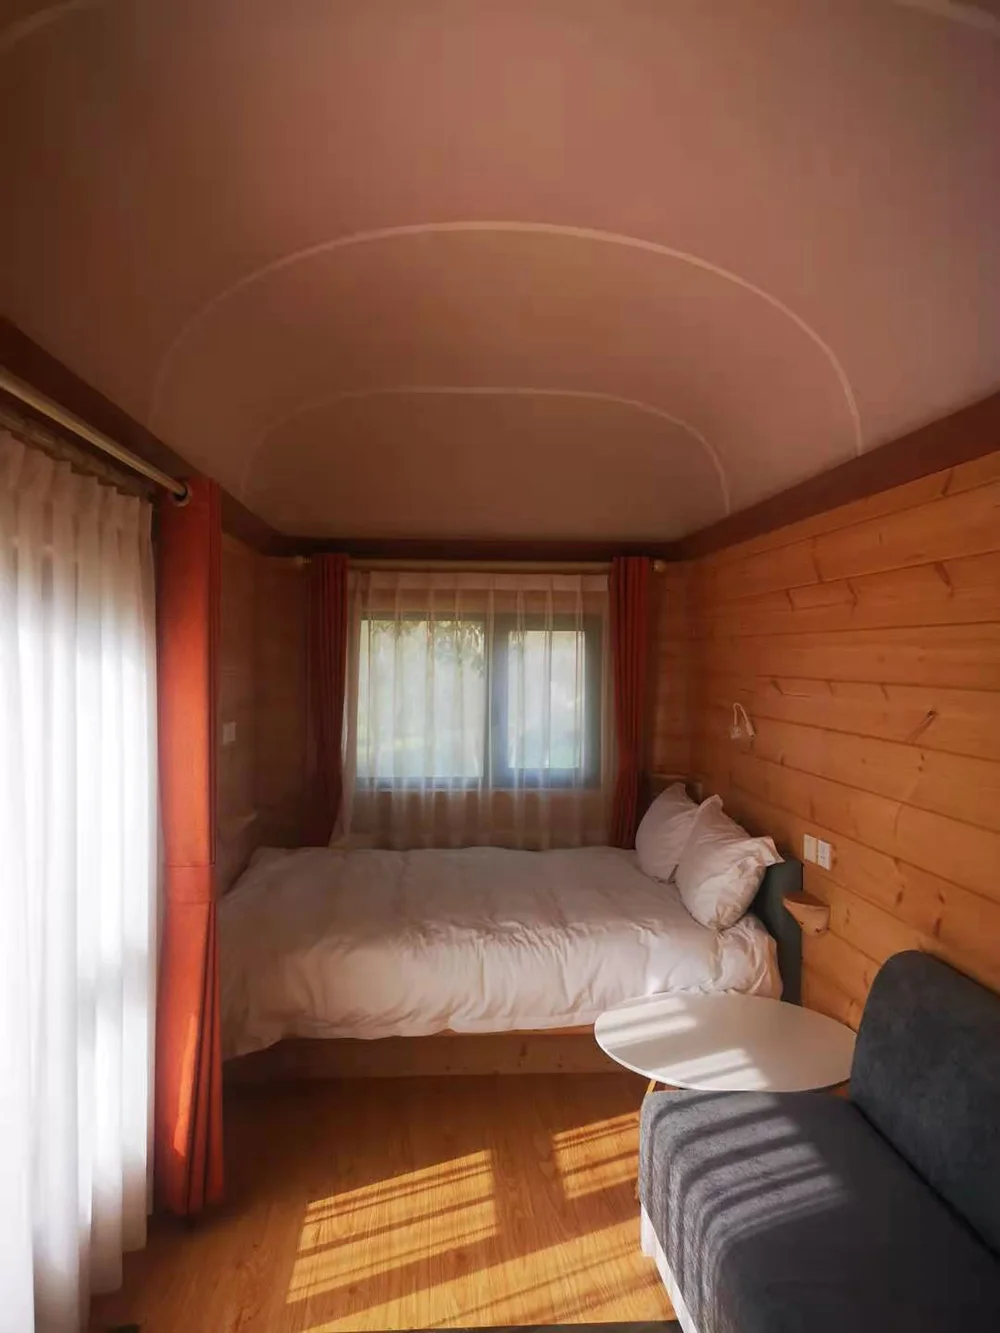 2021 Exquisite sleeping pod sunrooms & glass houses with dormer pramet